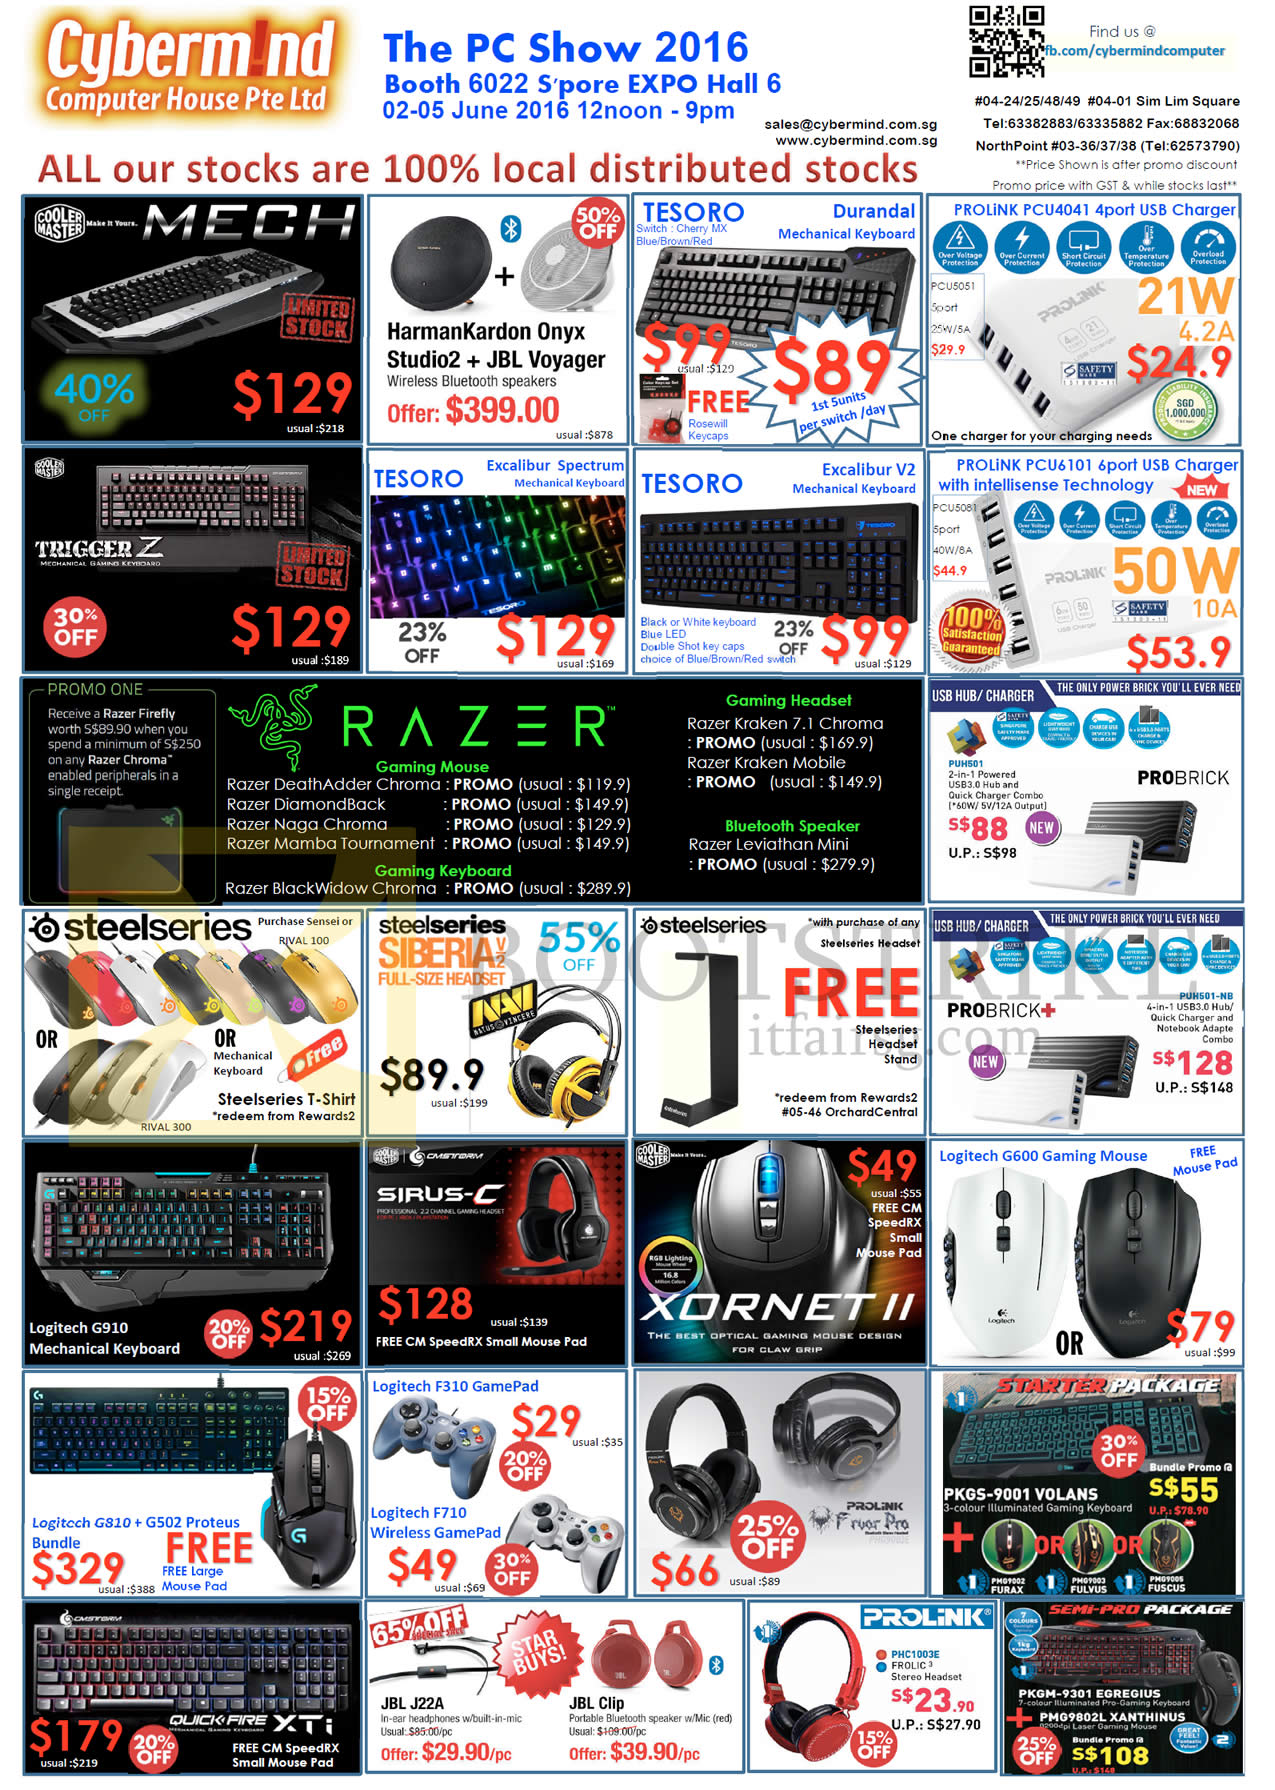 PC SHOW 2016 price list image brochure of Cybermind Keyboards, Speakers, USB Chargers, Headset, Mouse, GamePad, Cooler Master, Harman Kardon, Prolink, Tesoro, Razer, Steelseries, Siberia, Logitech